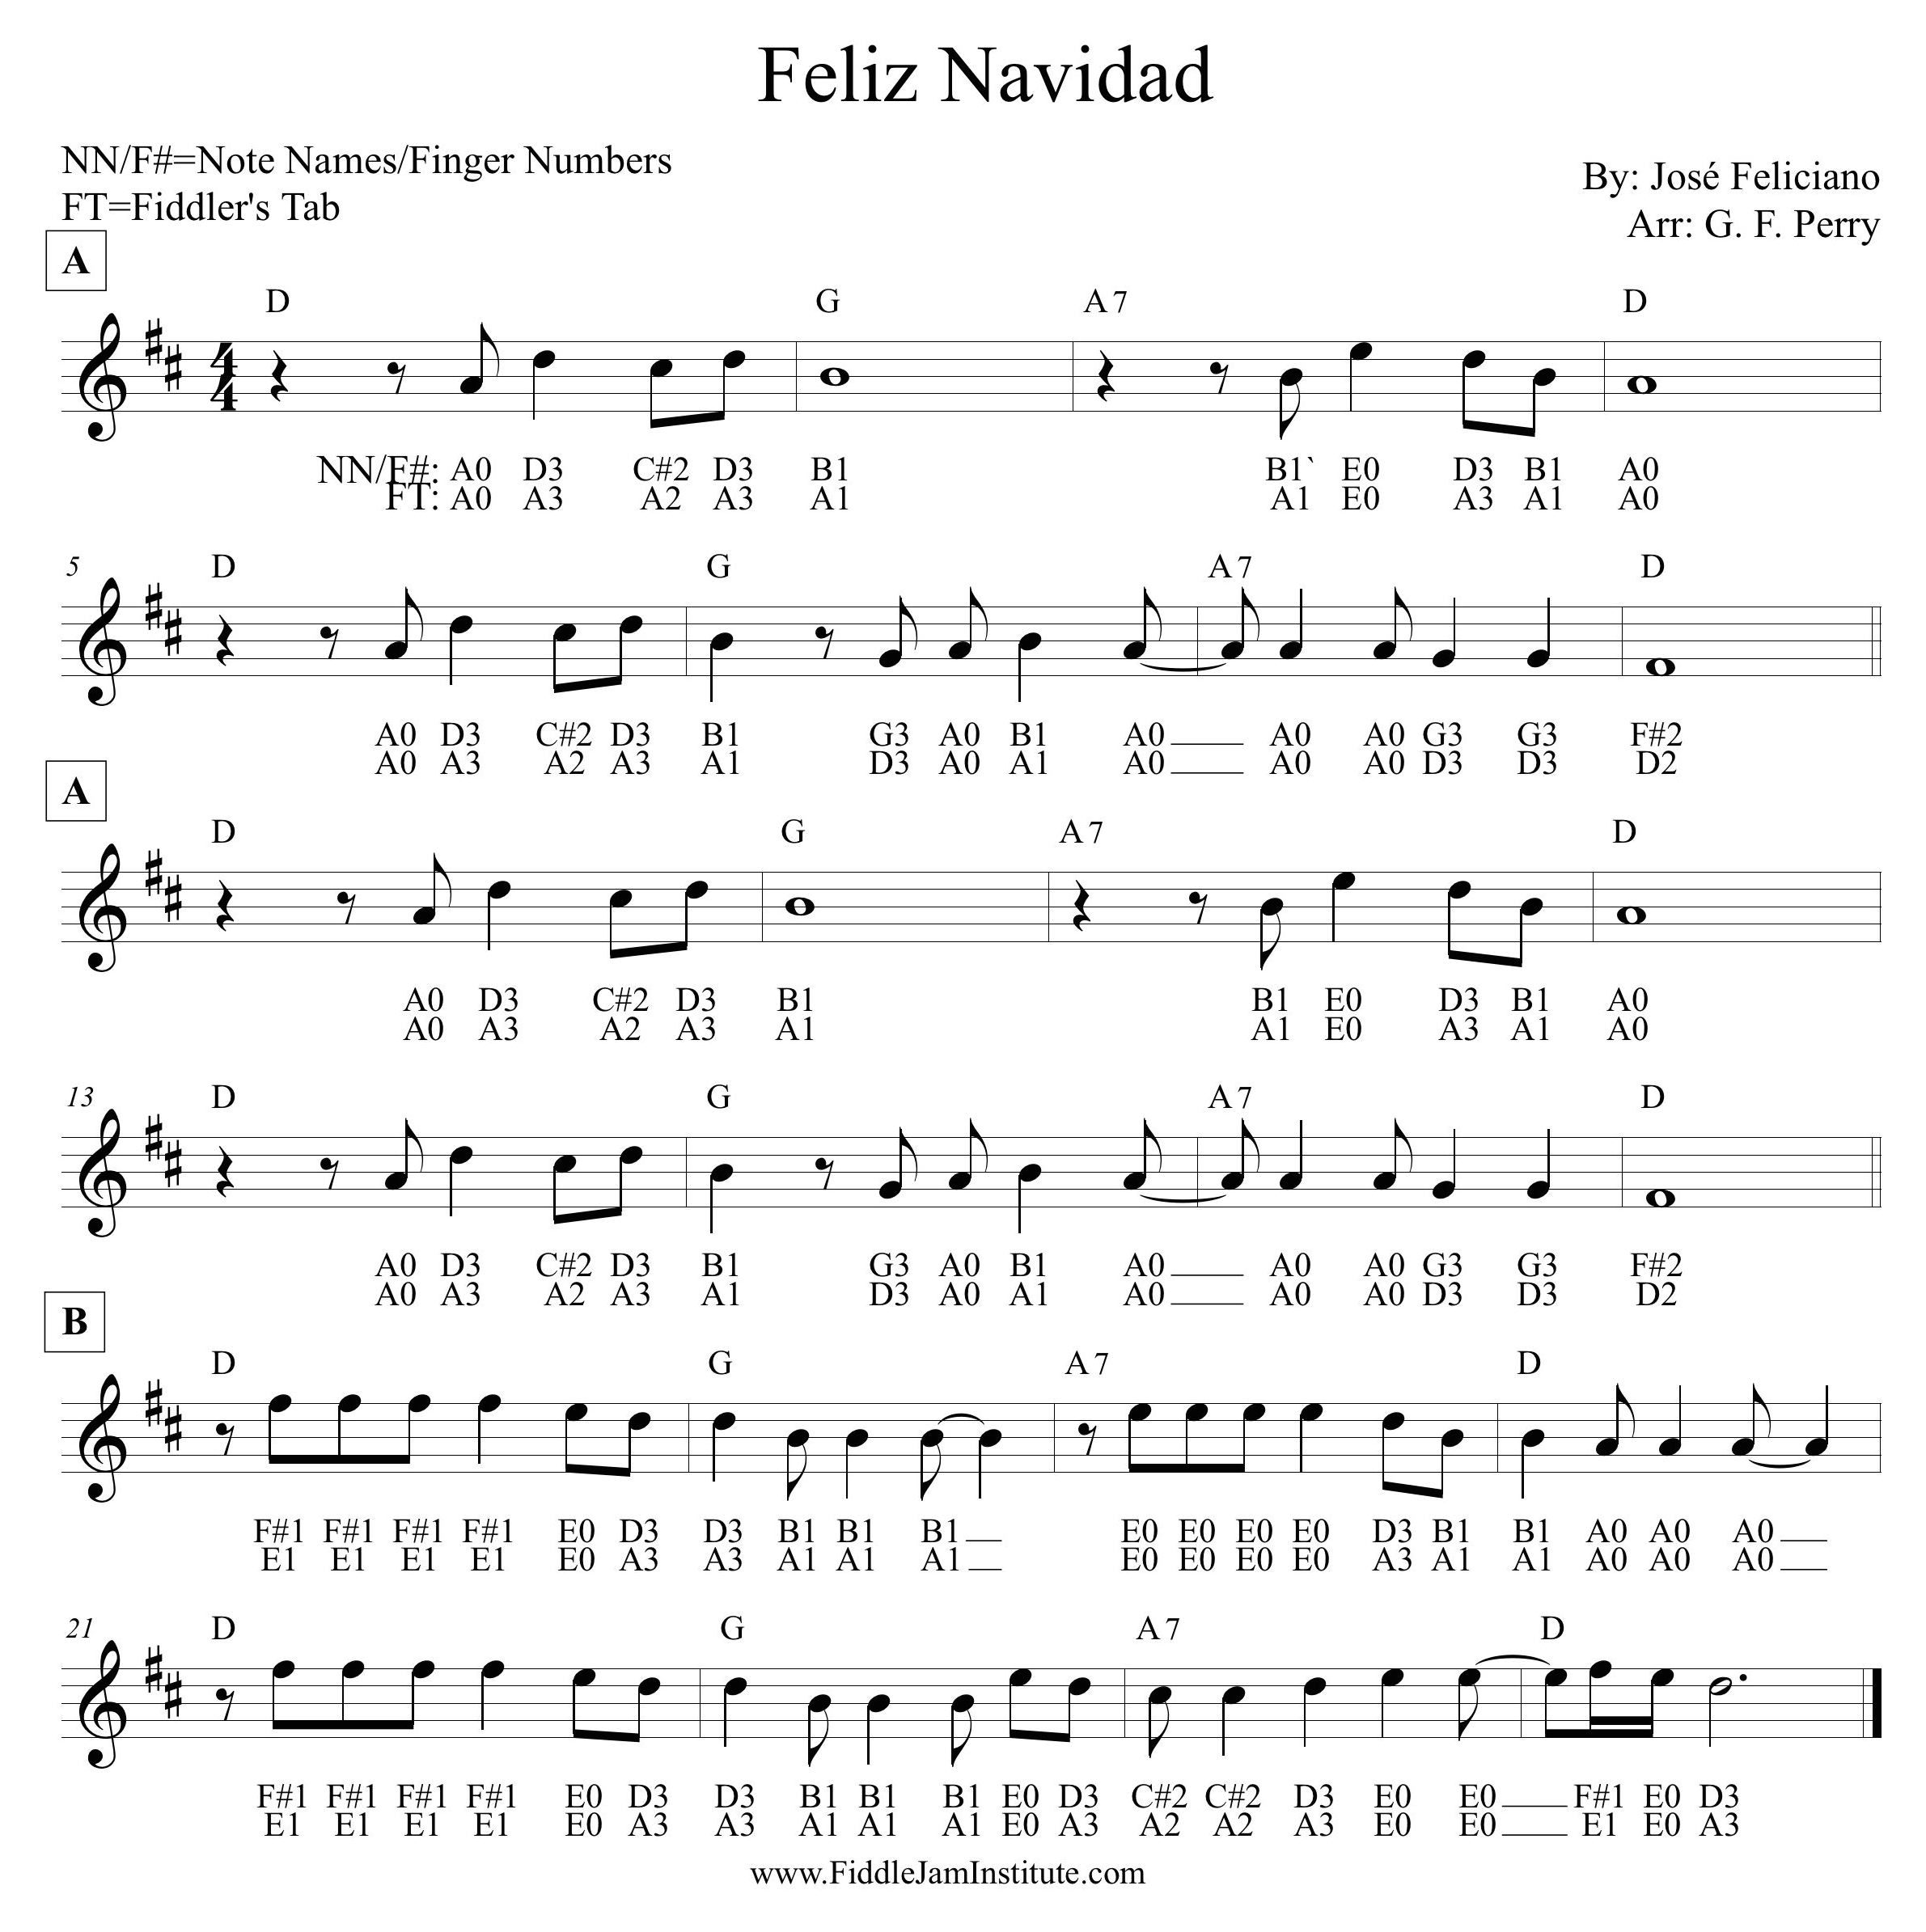 Feliz Navidad Chord Chart